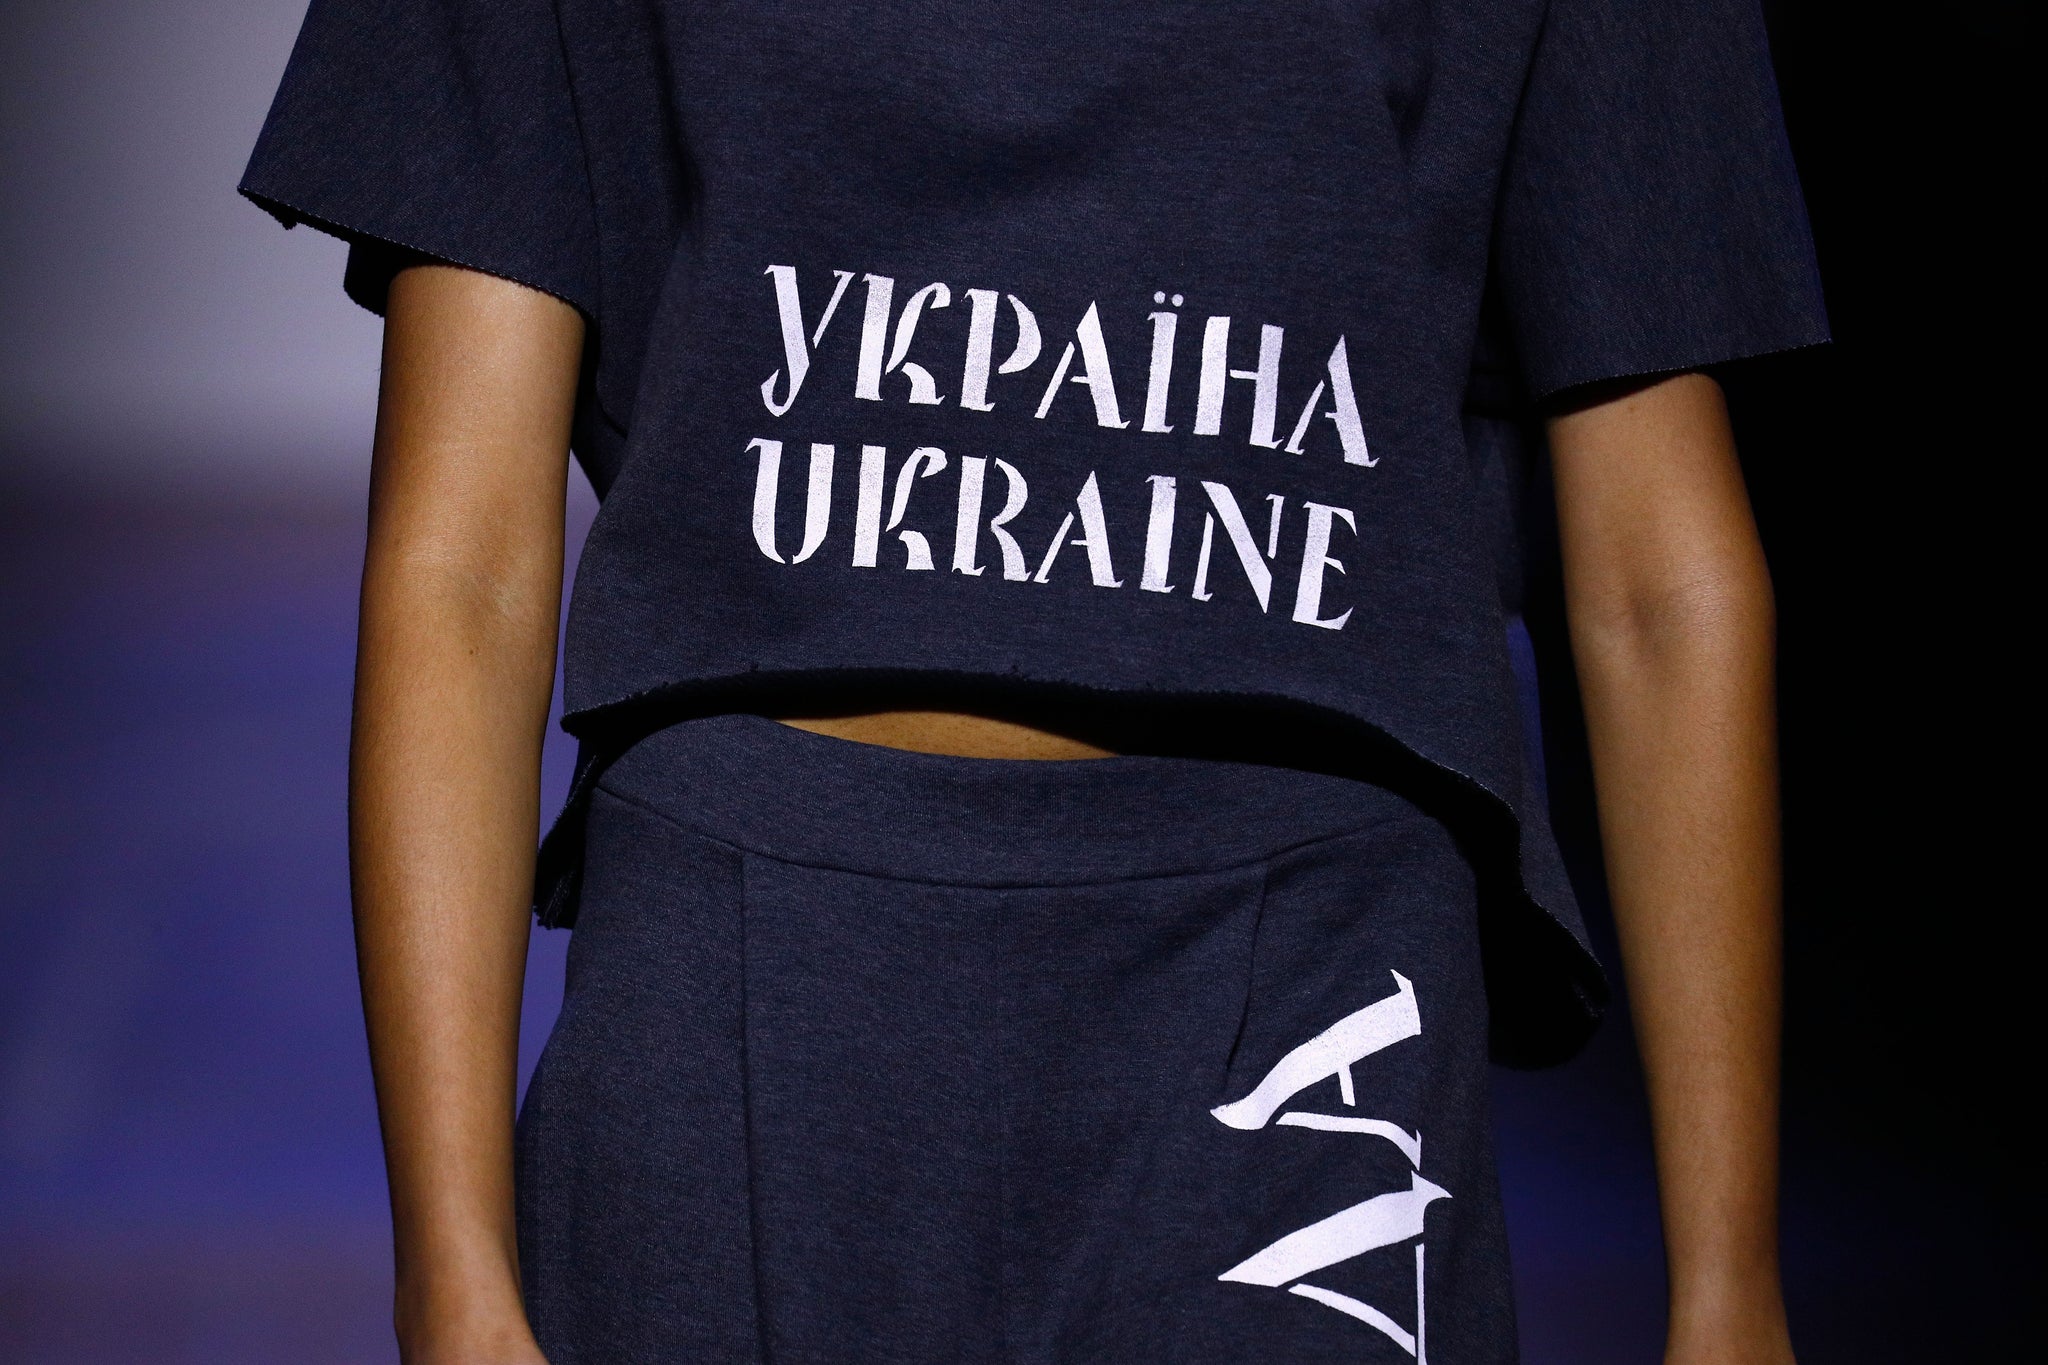 Ukraine/Freedom T-Shirt and Pants Set